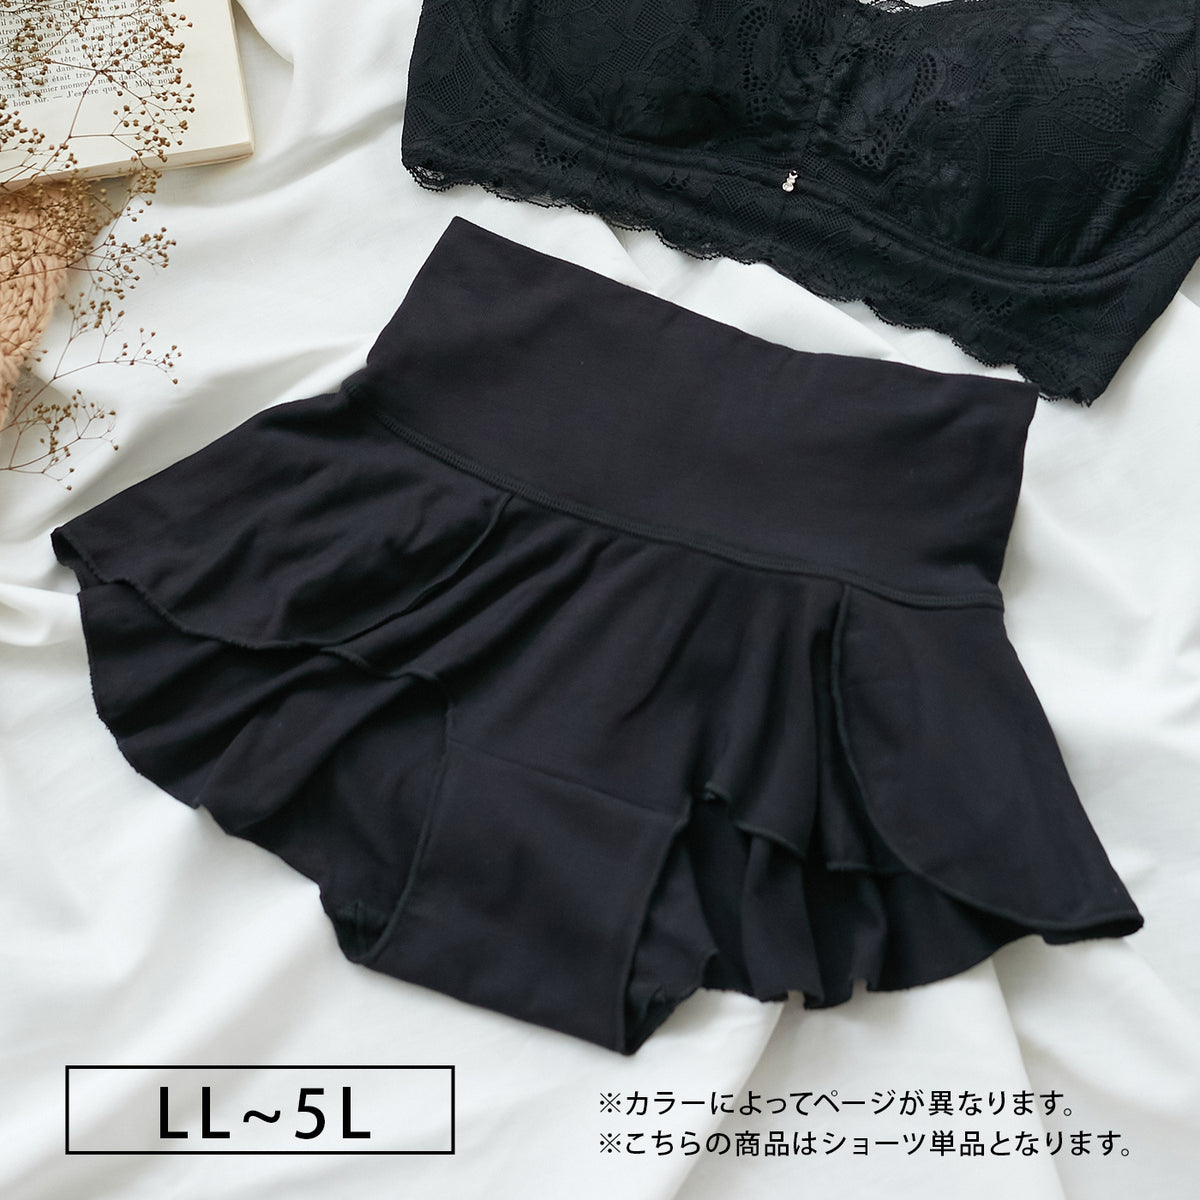 【LL〜5L】Relaxina bra ナイトショーツ（ブラック）_90429-51